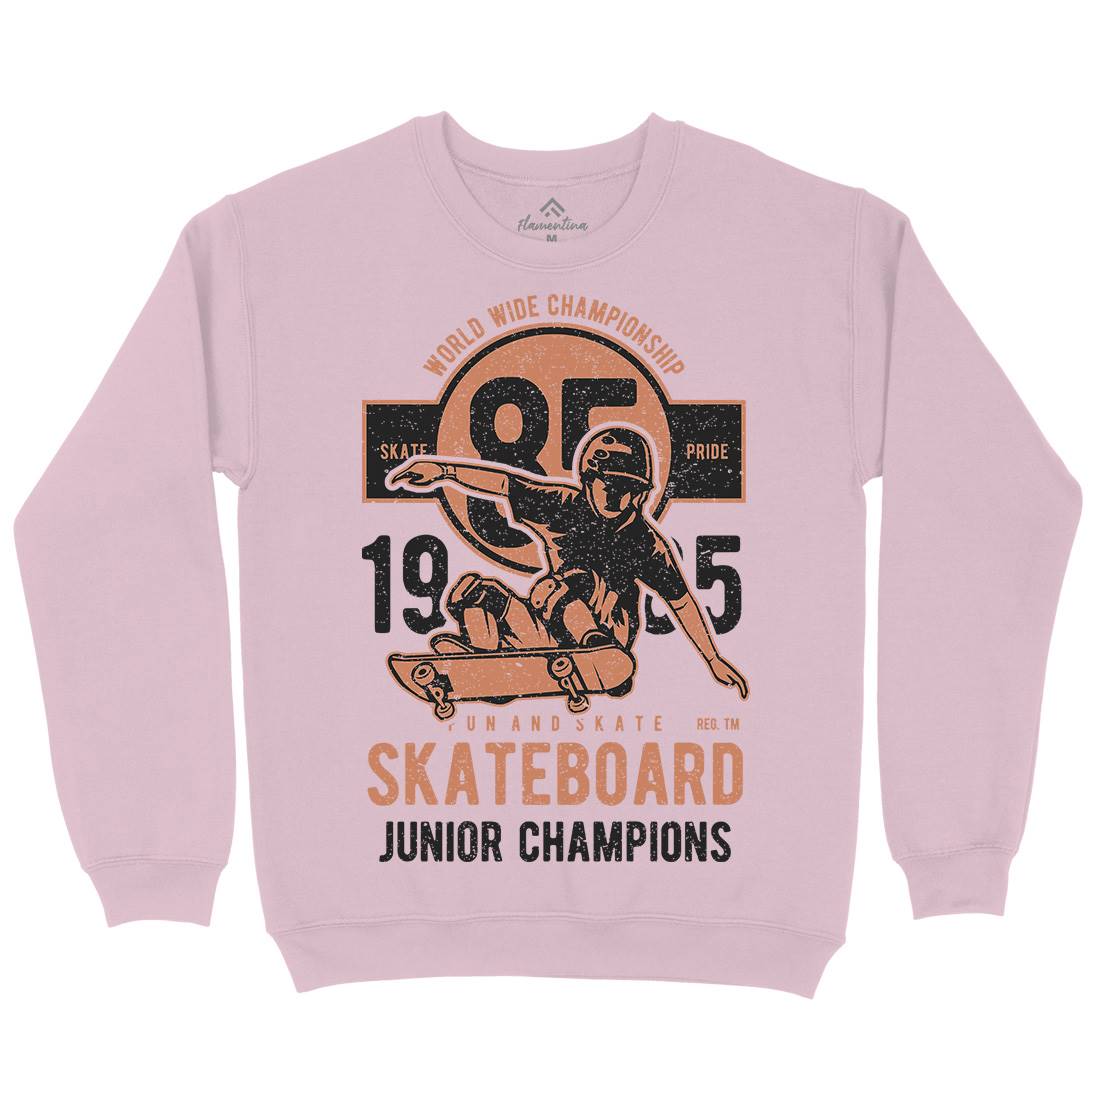 Skateboard Junior Champions Kids Crew Neck Sweatshirt Skate A755